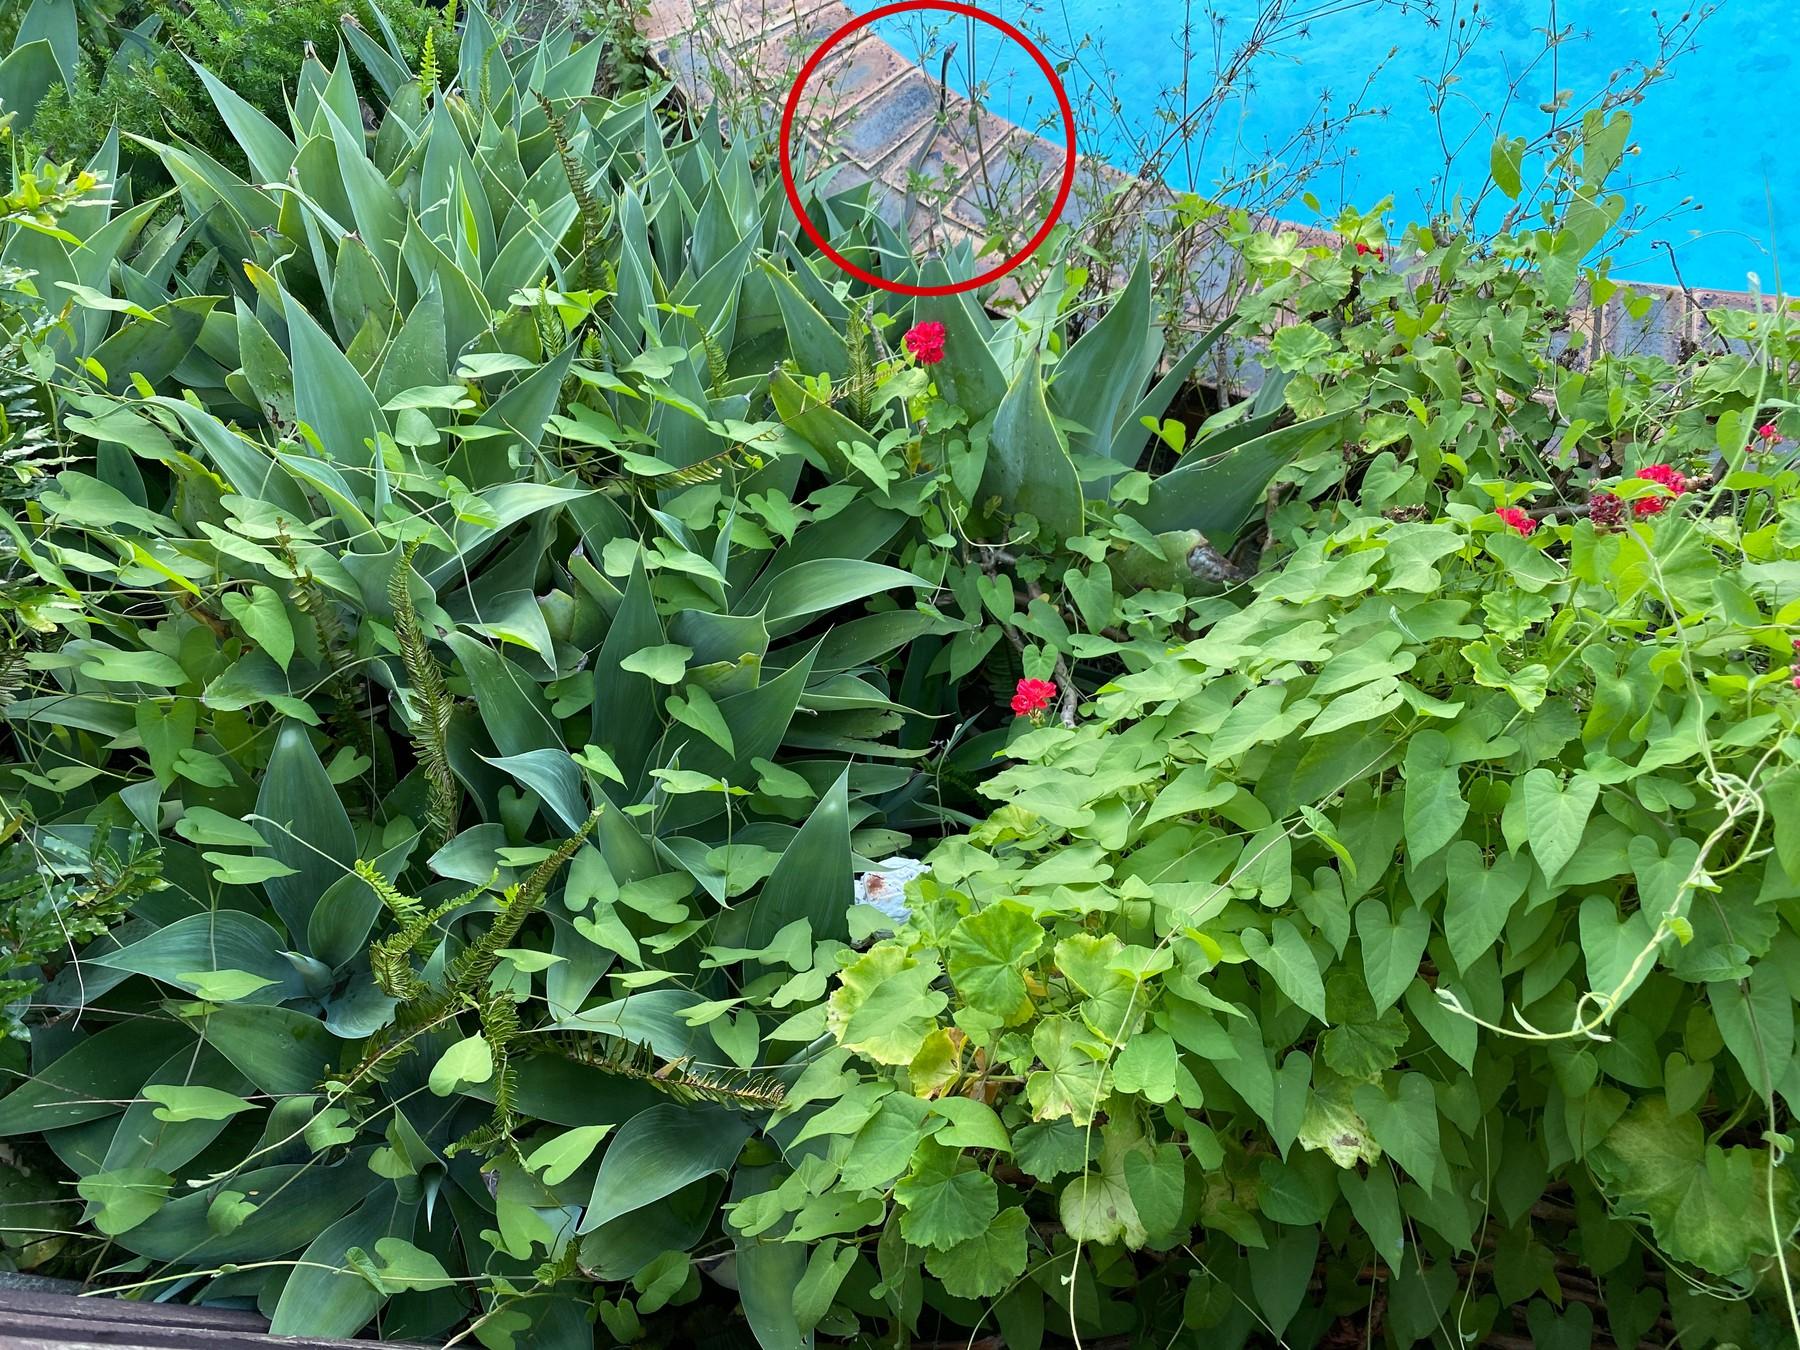 plante numeroase langa o piscina albastra, unde se afla un sarpe